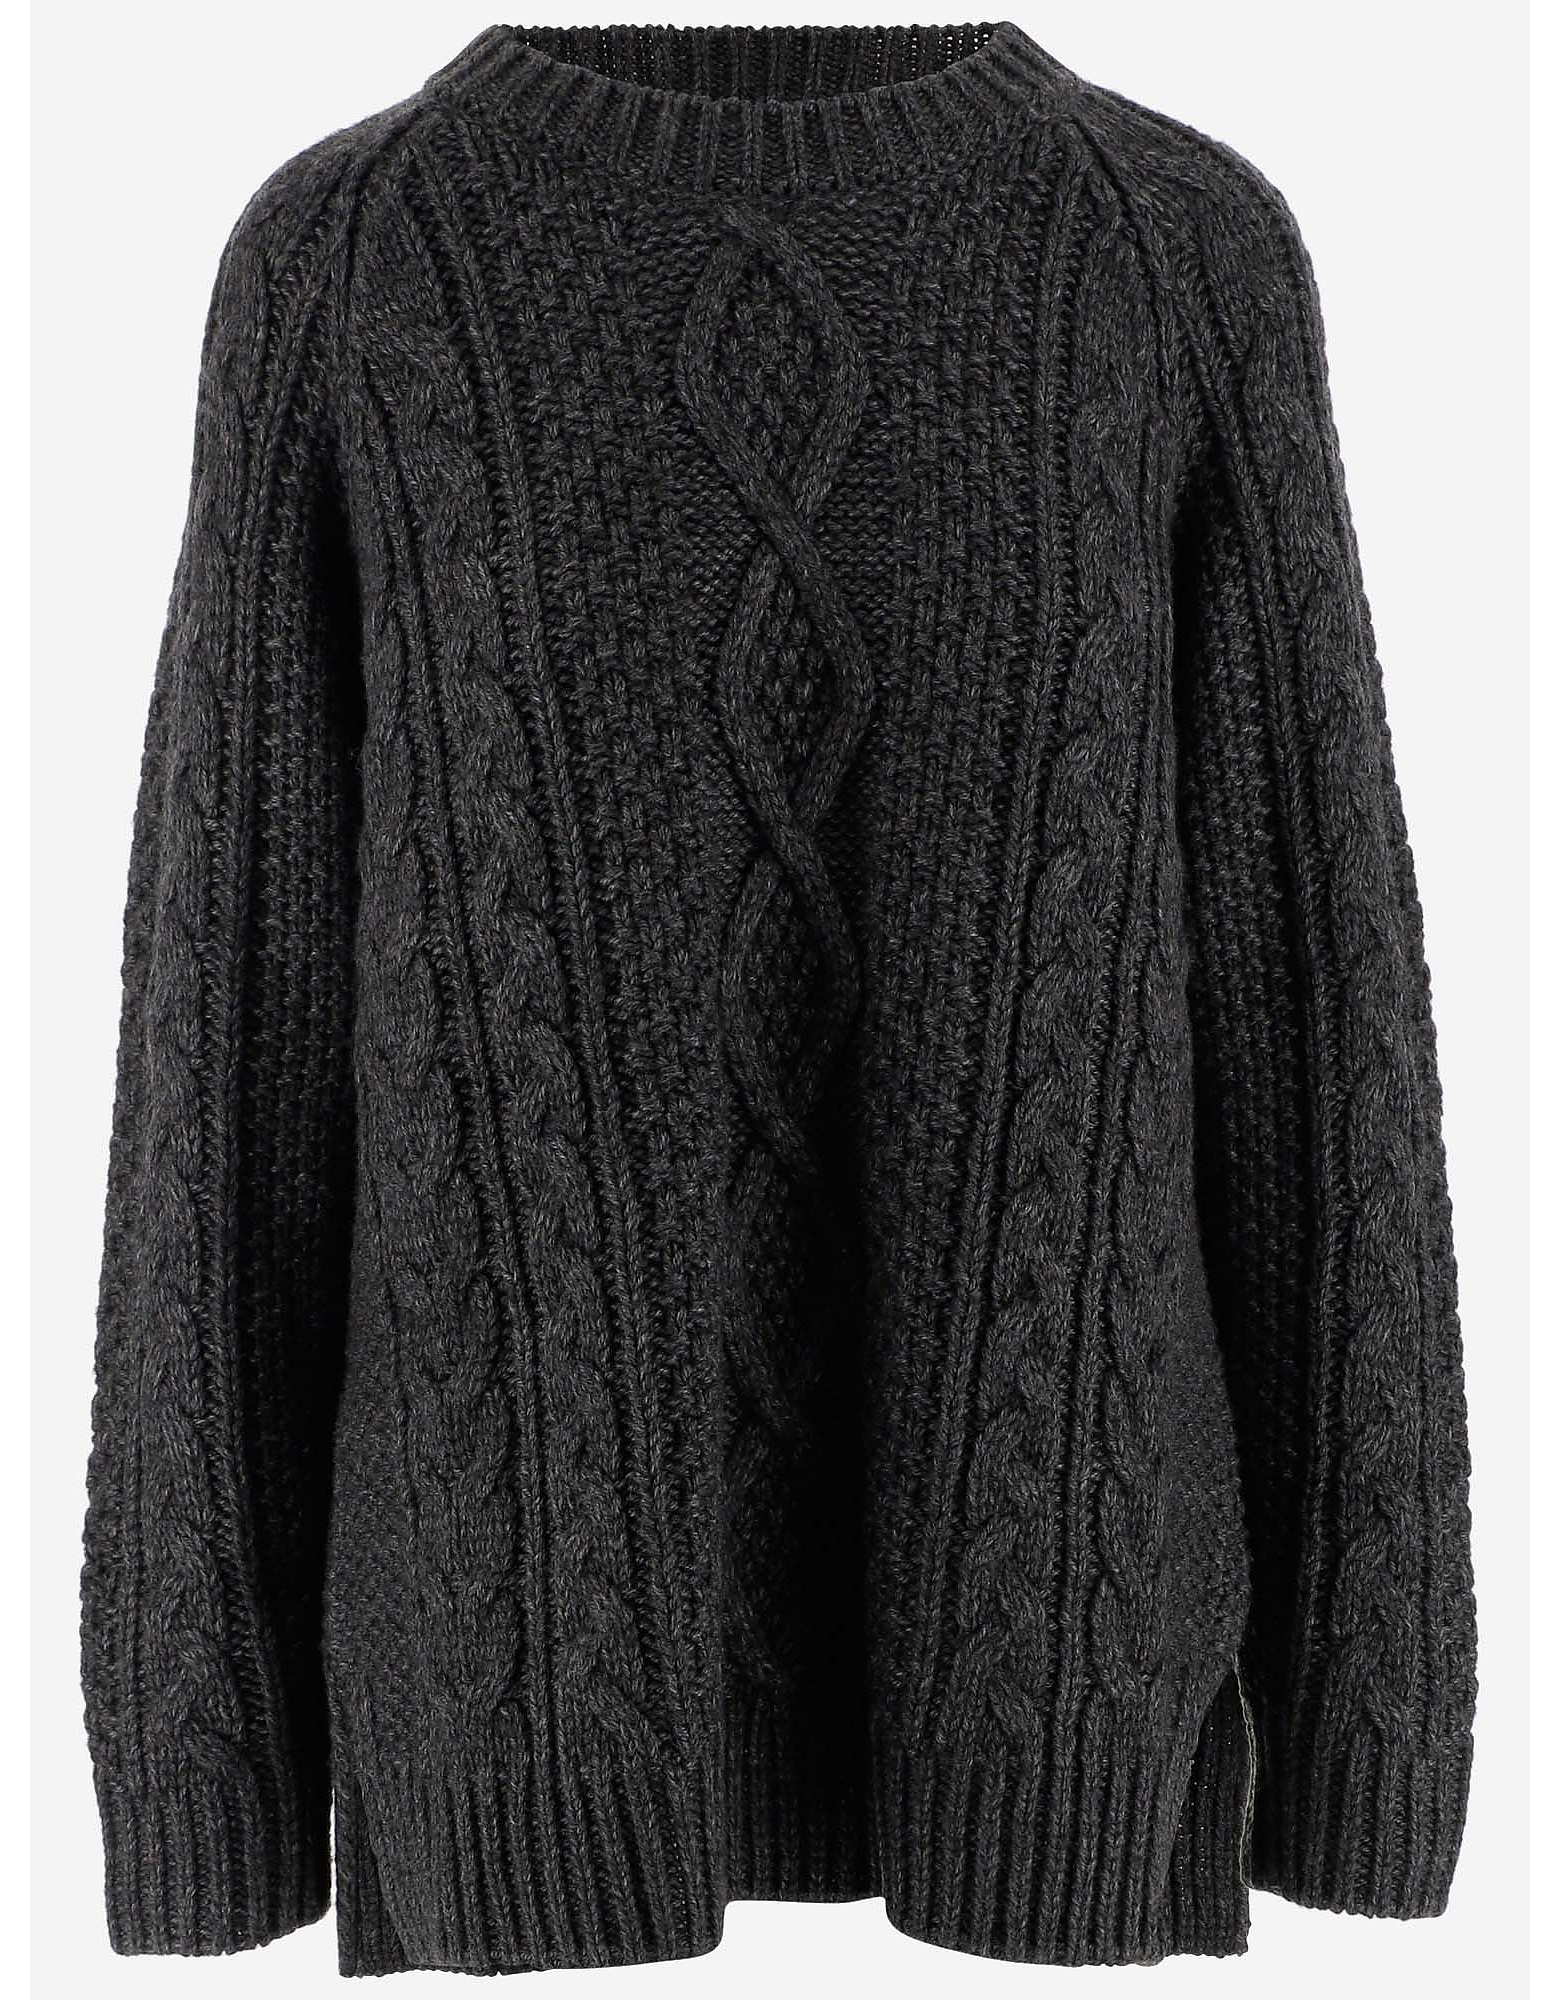 Parosh Designer Knitwear, Gray Alpaca and Wool Blend Cable-Knit Women's Sweater